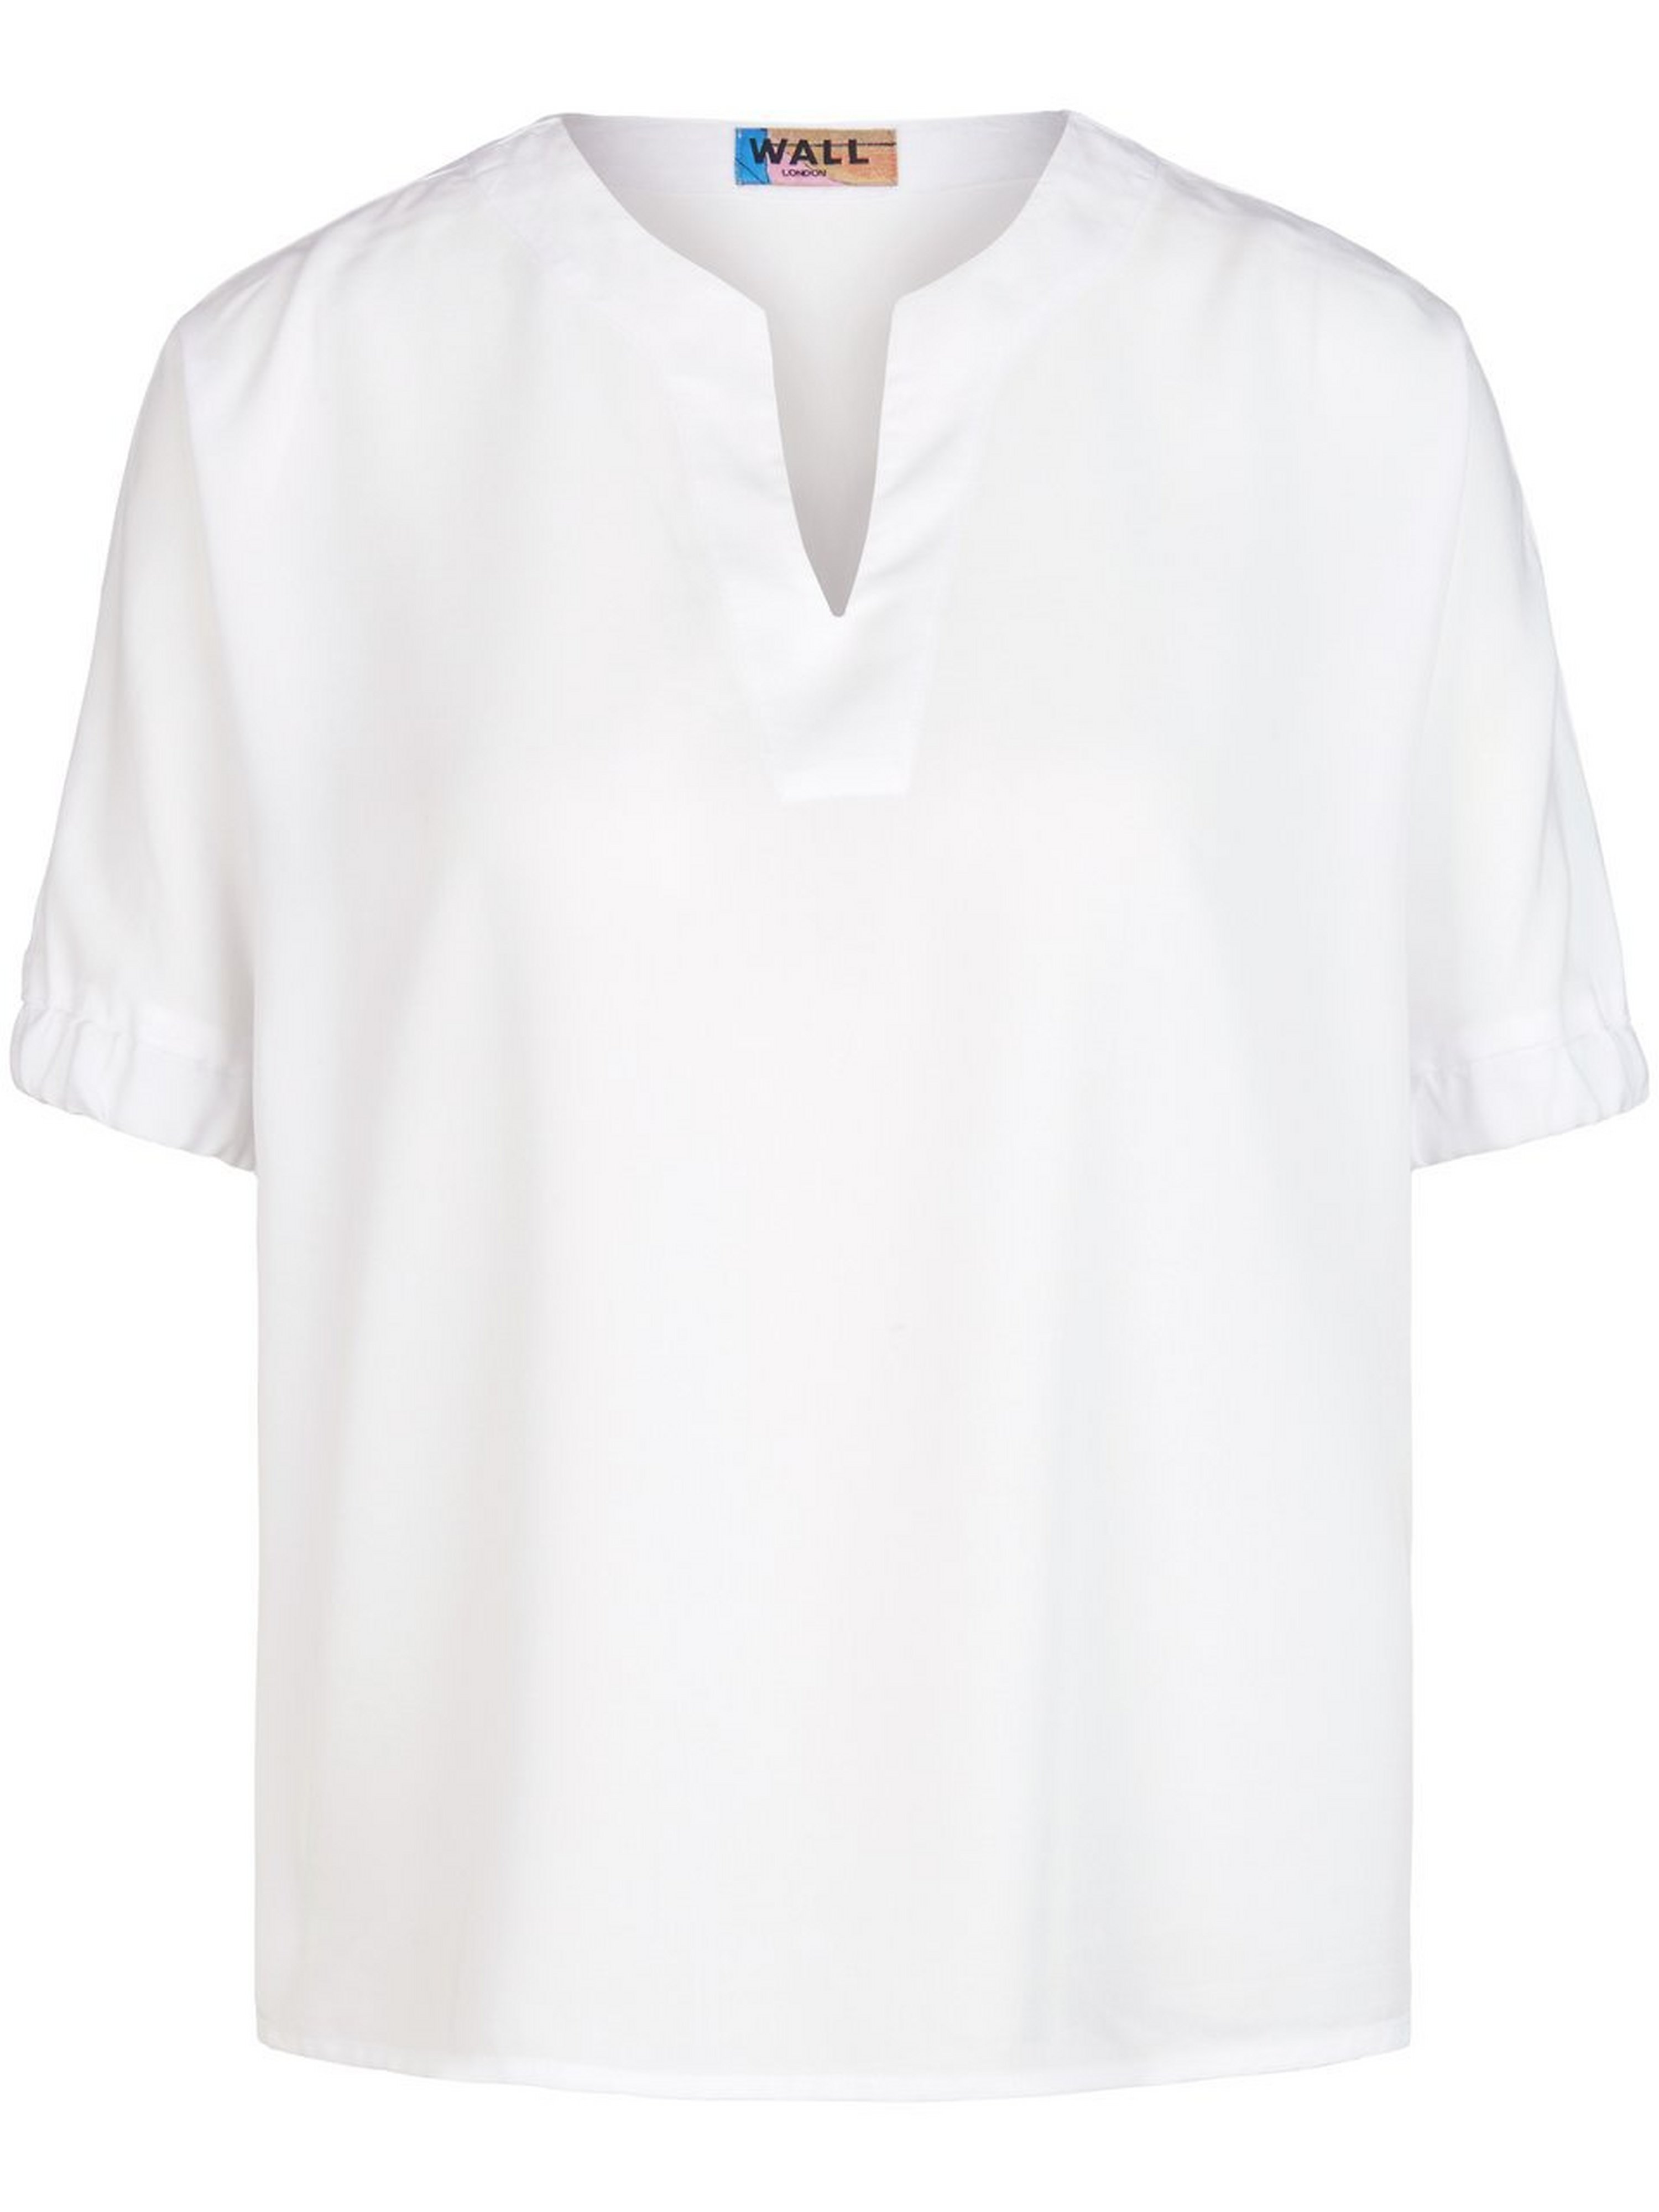 La blouse 100% lyocell  WALL London blanc taille 48